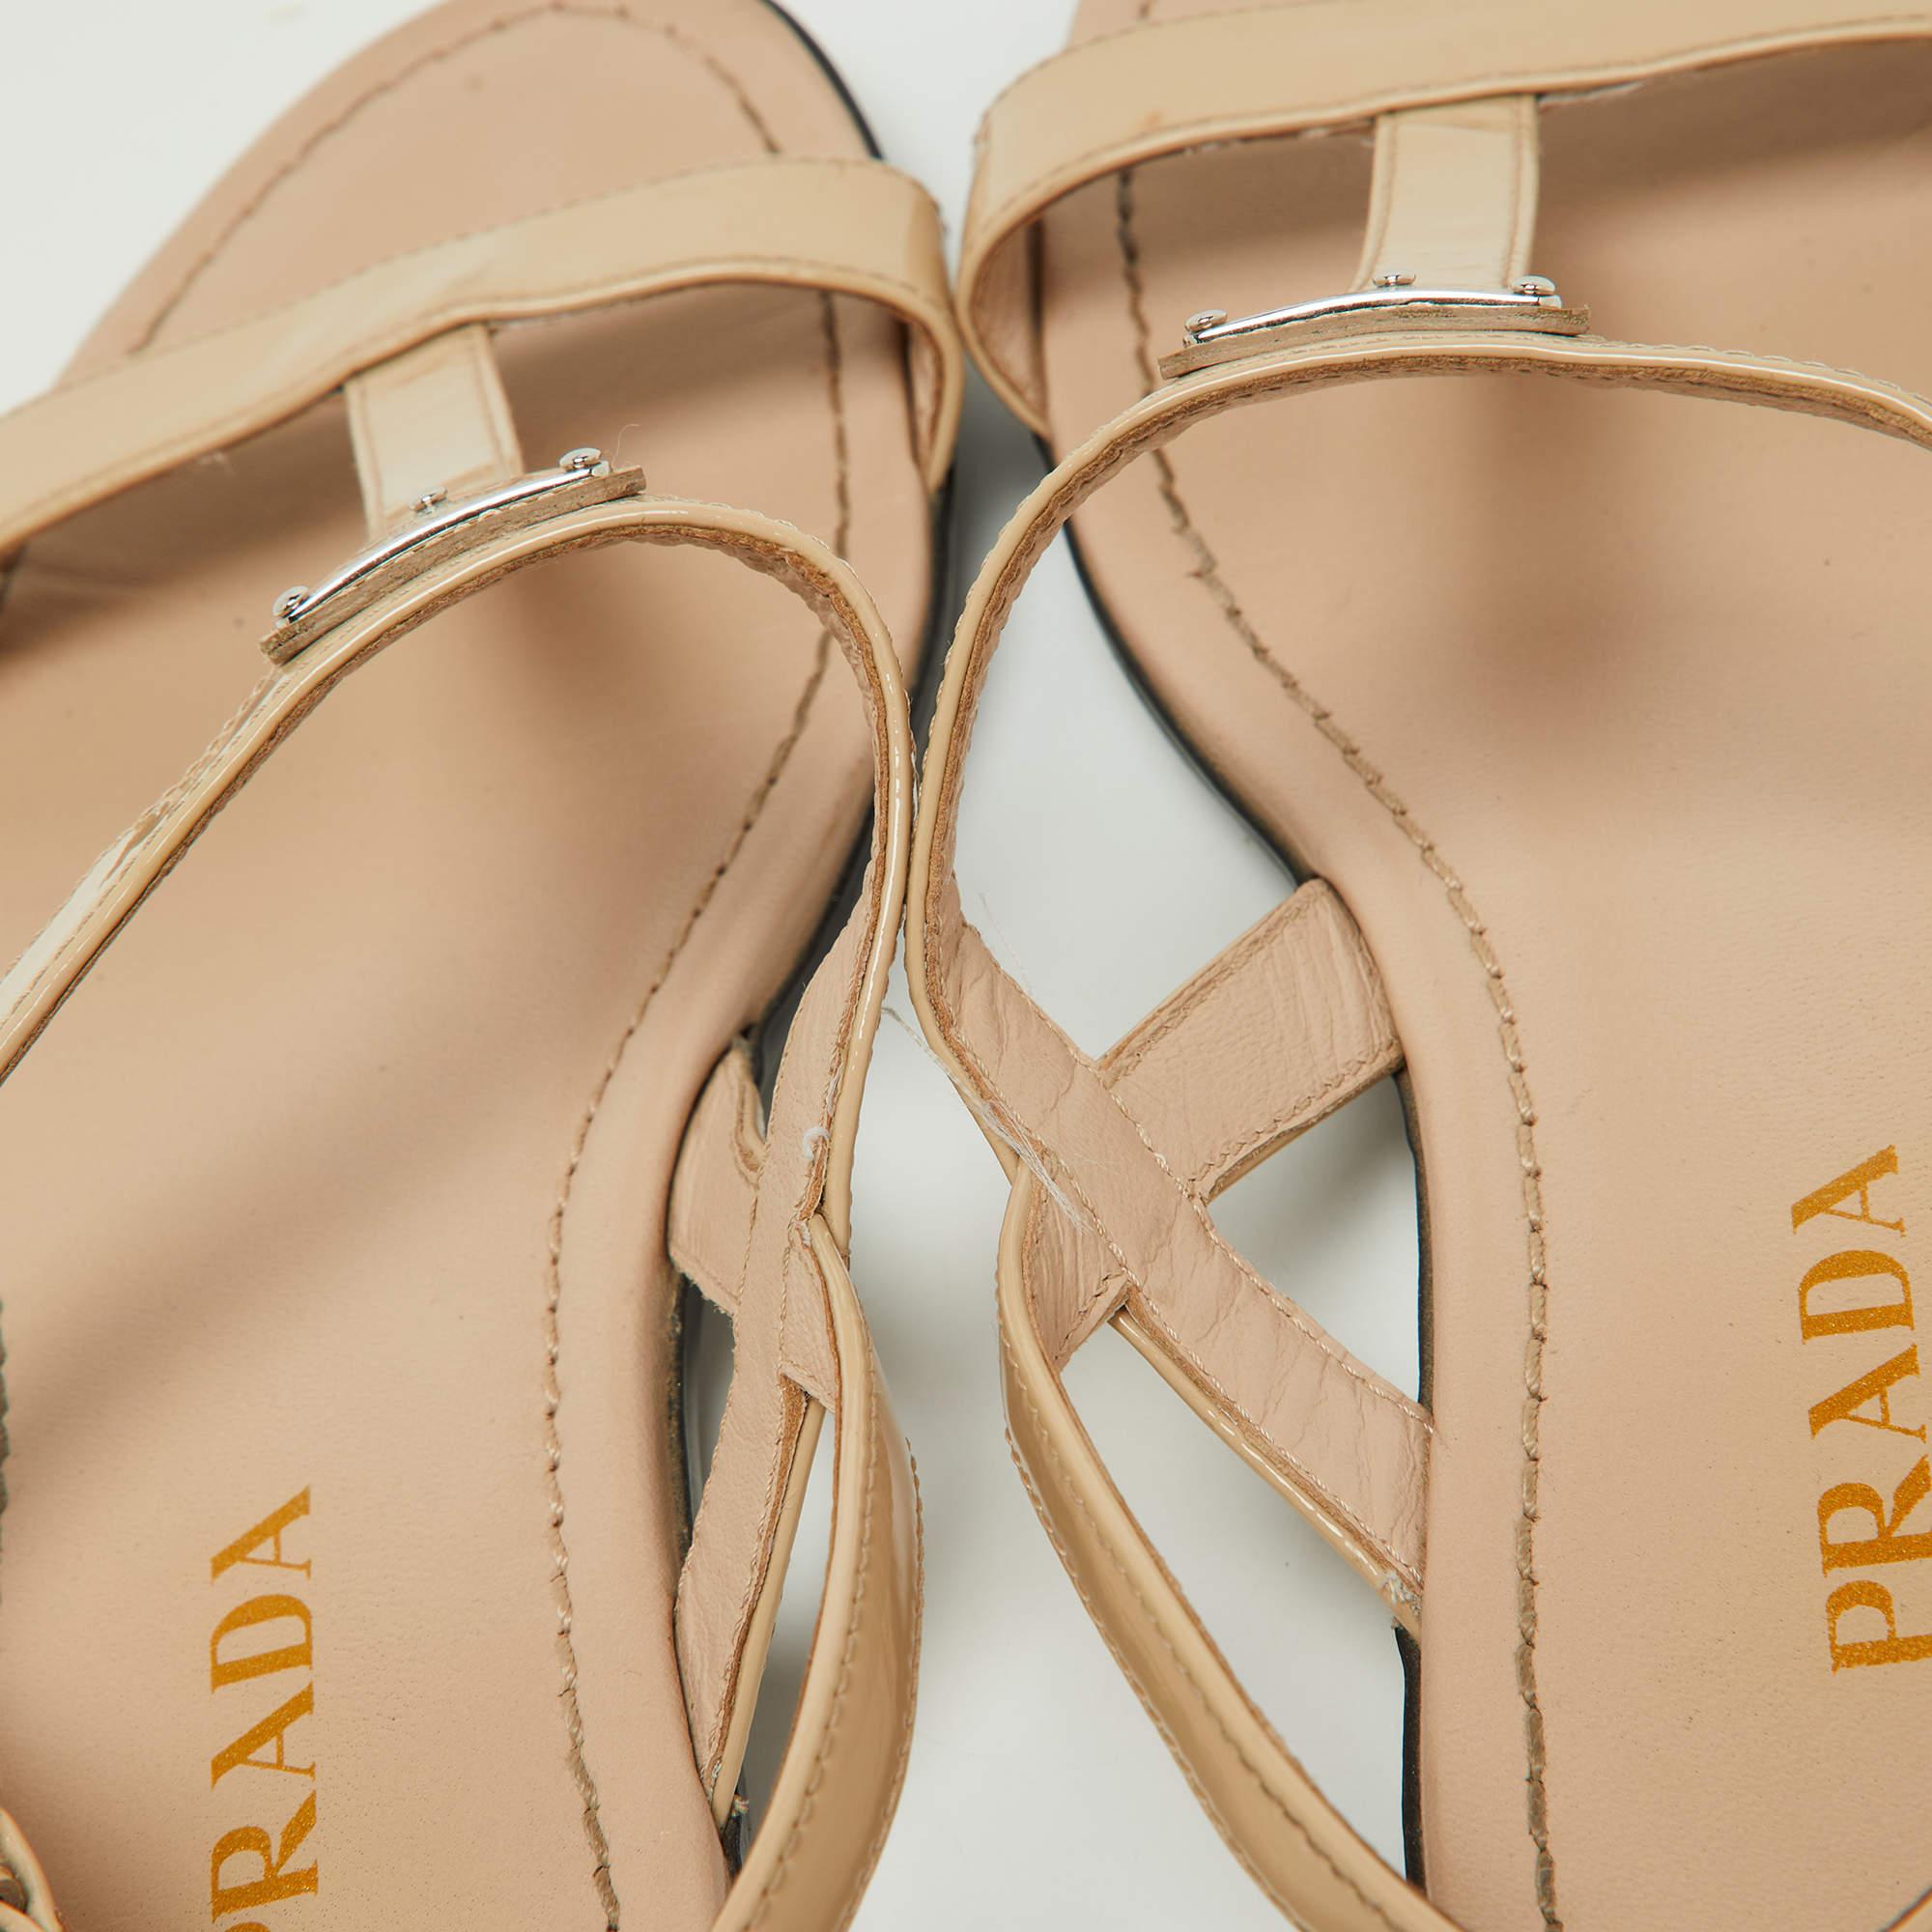 Prada Beige Patent Leather Flat Sandals Size 39 1